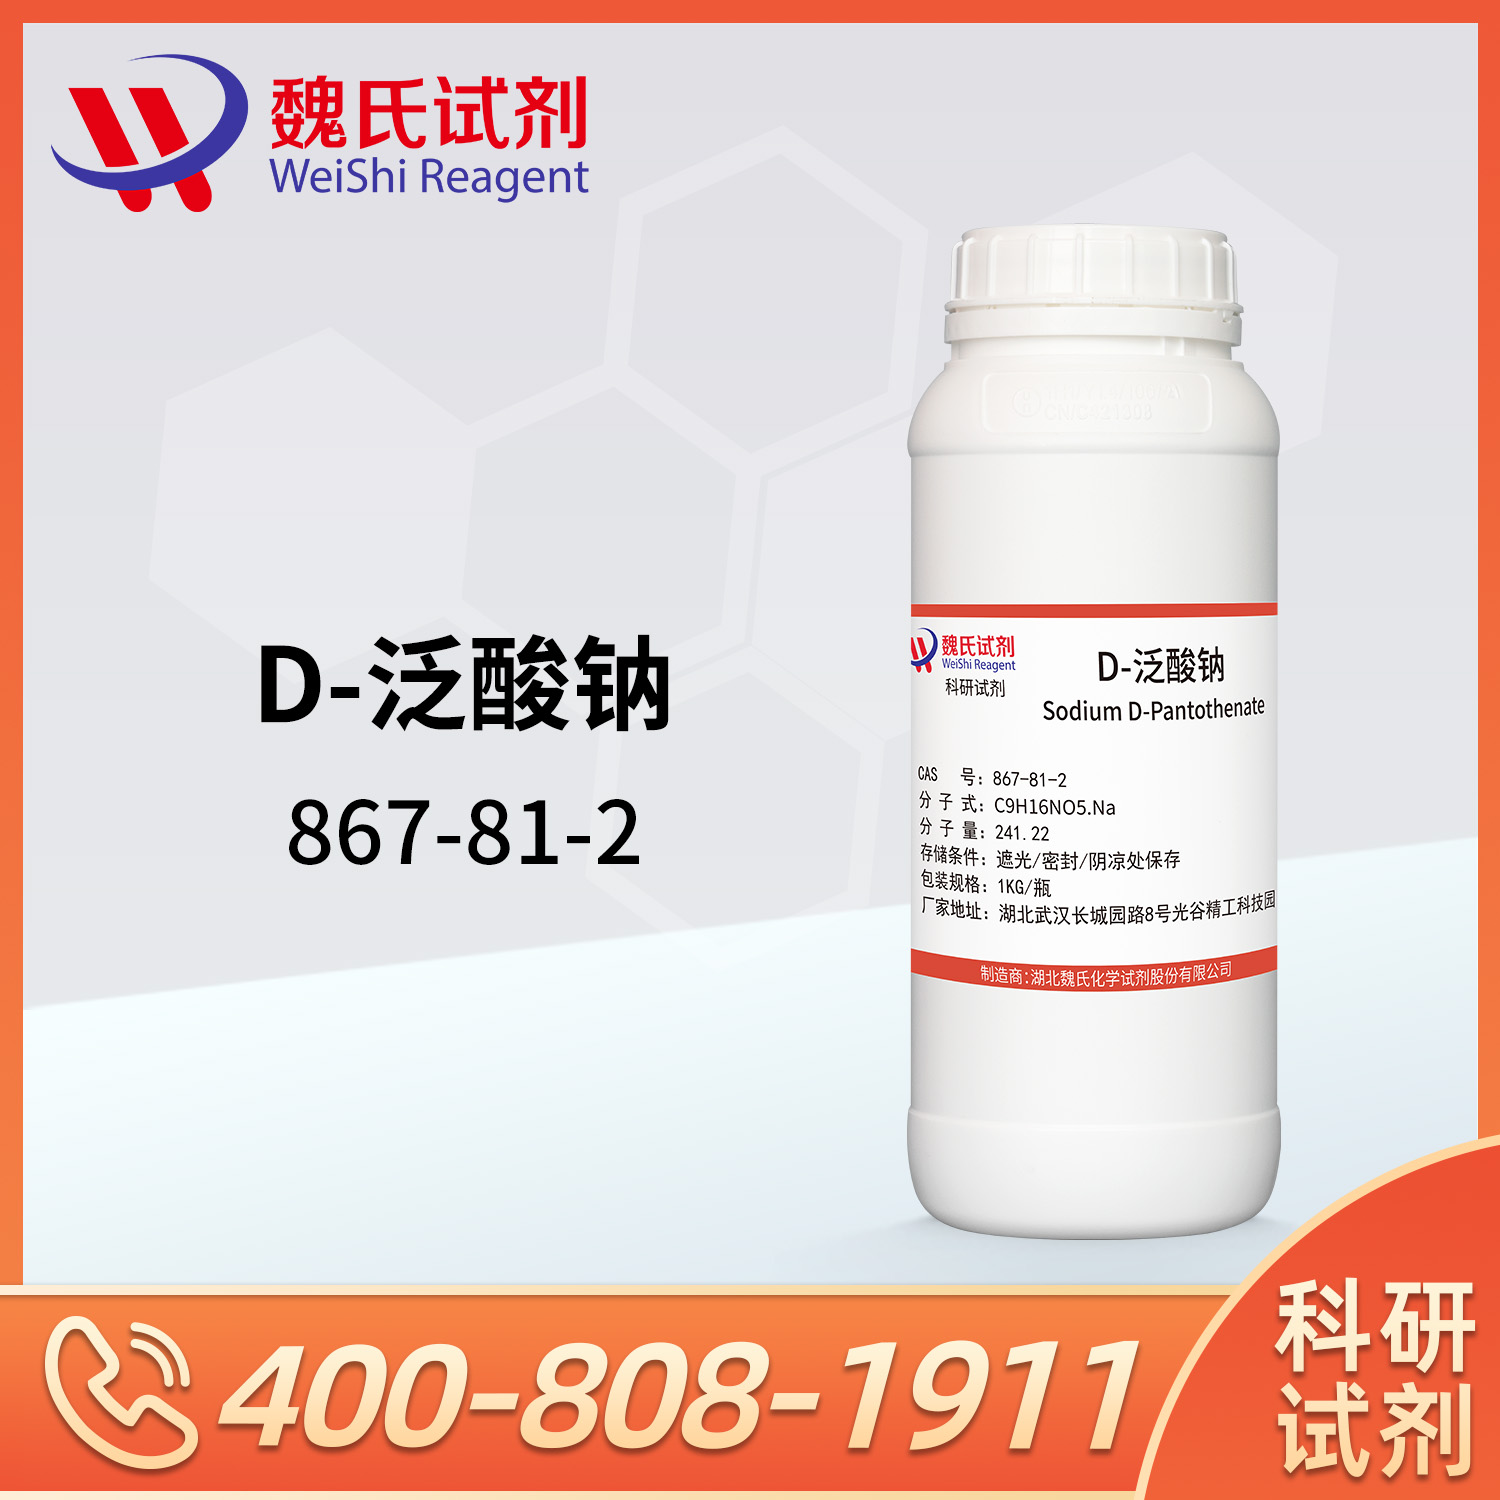 Sodium D-Pantothenate